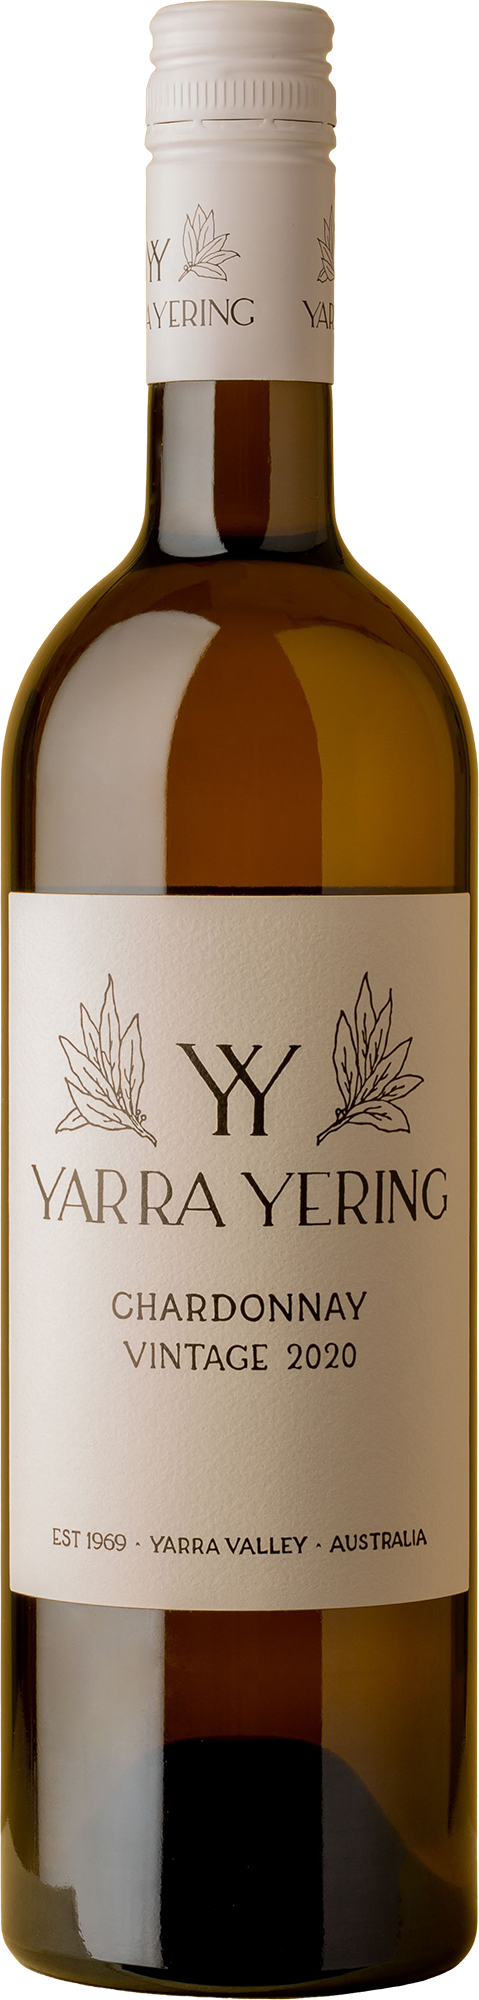 Yarra Yering - Chardonnay 2020 White Wine